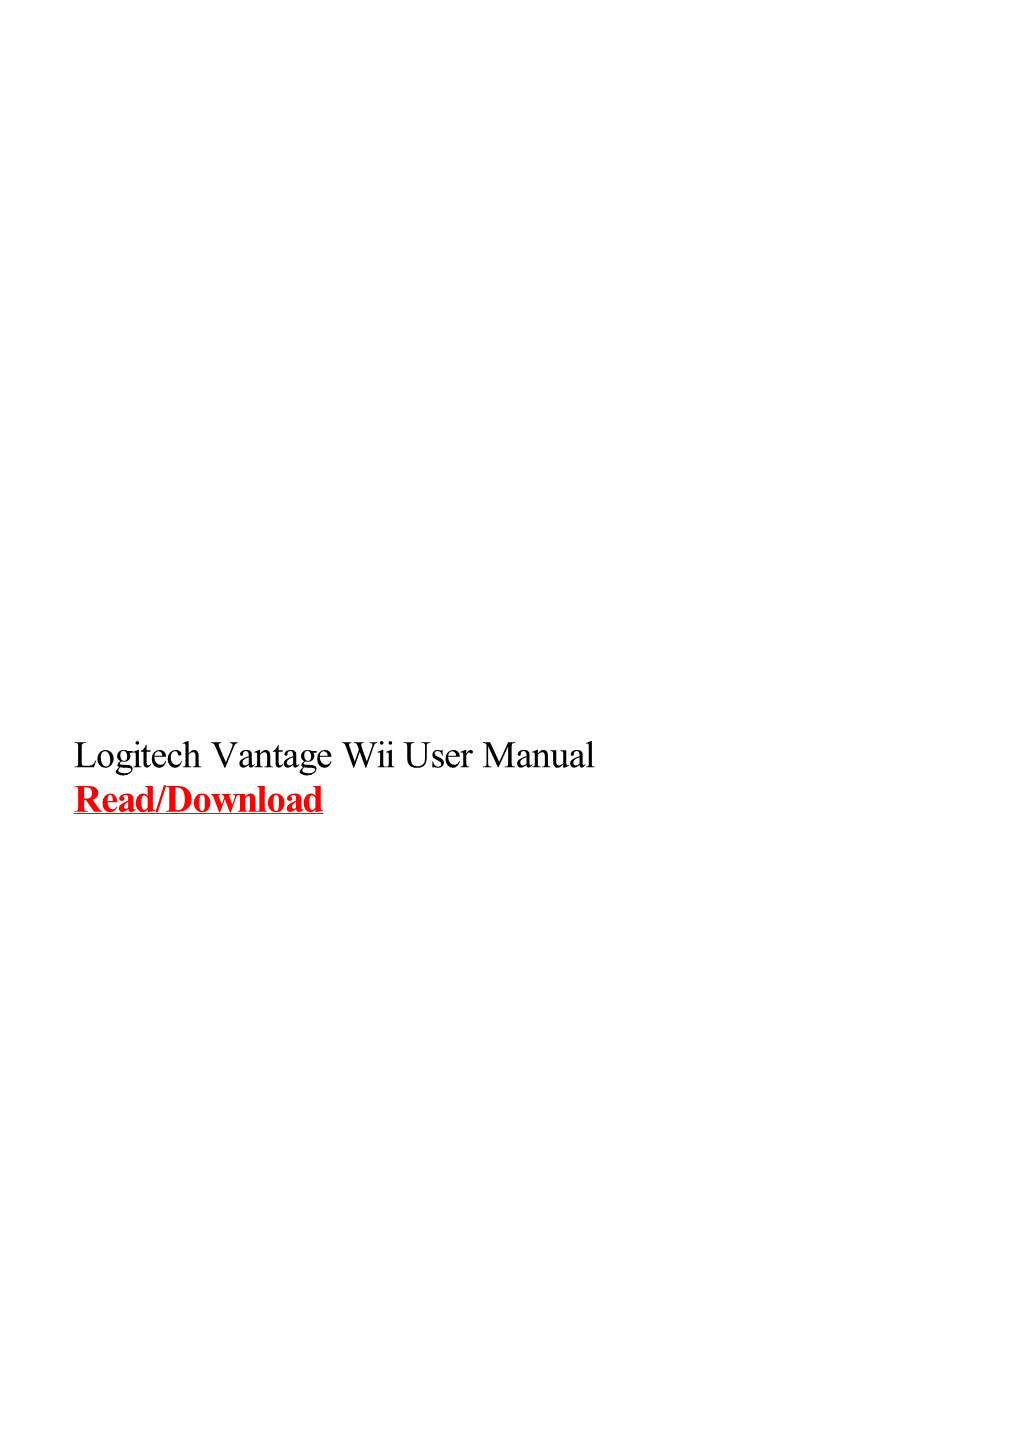 Logitech Vantage Wii User Manual